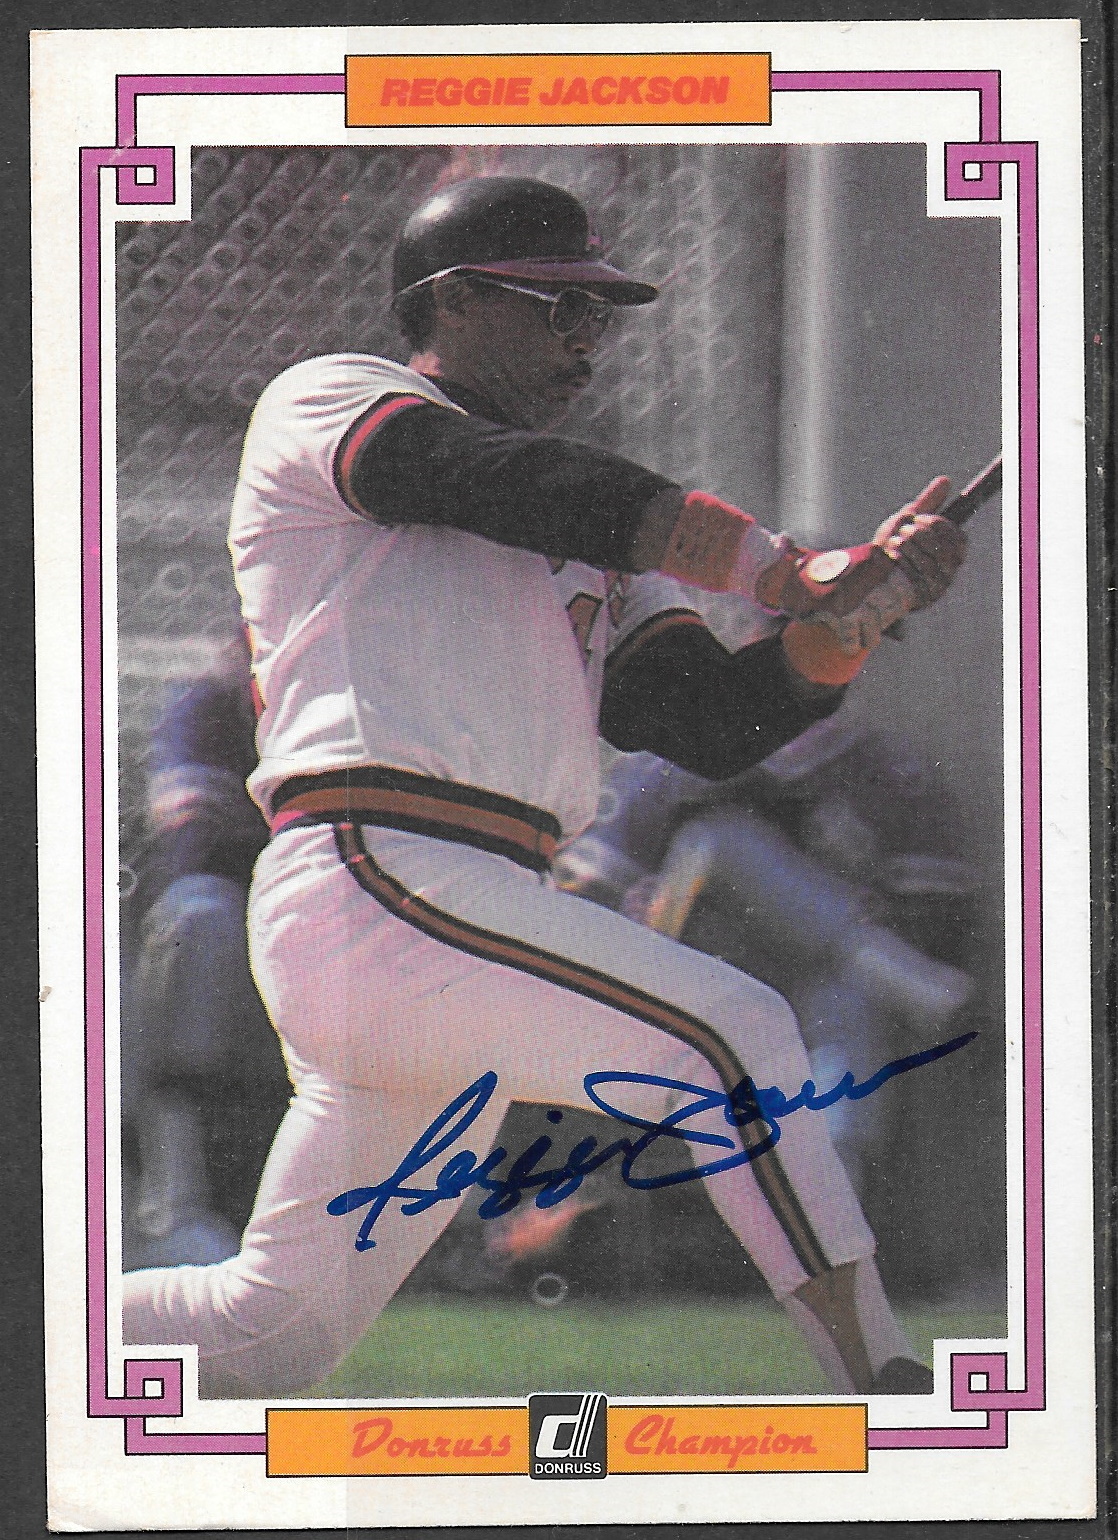 Reggie Jackson baseball card